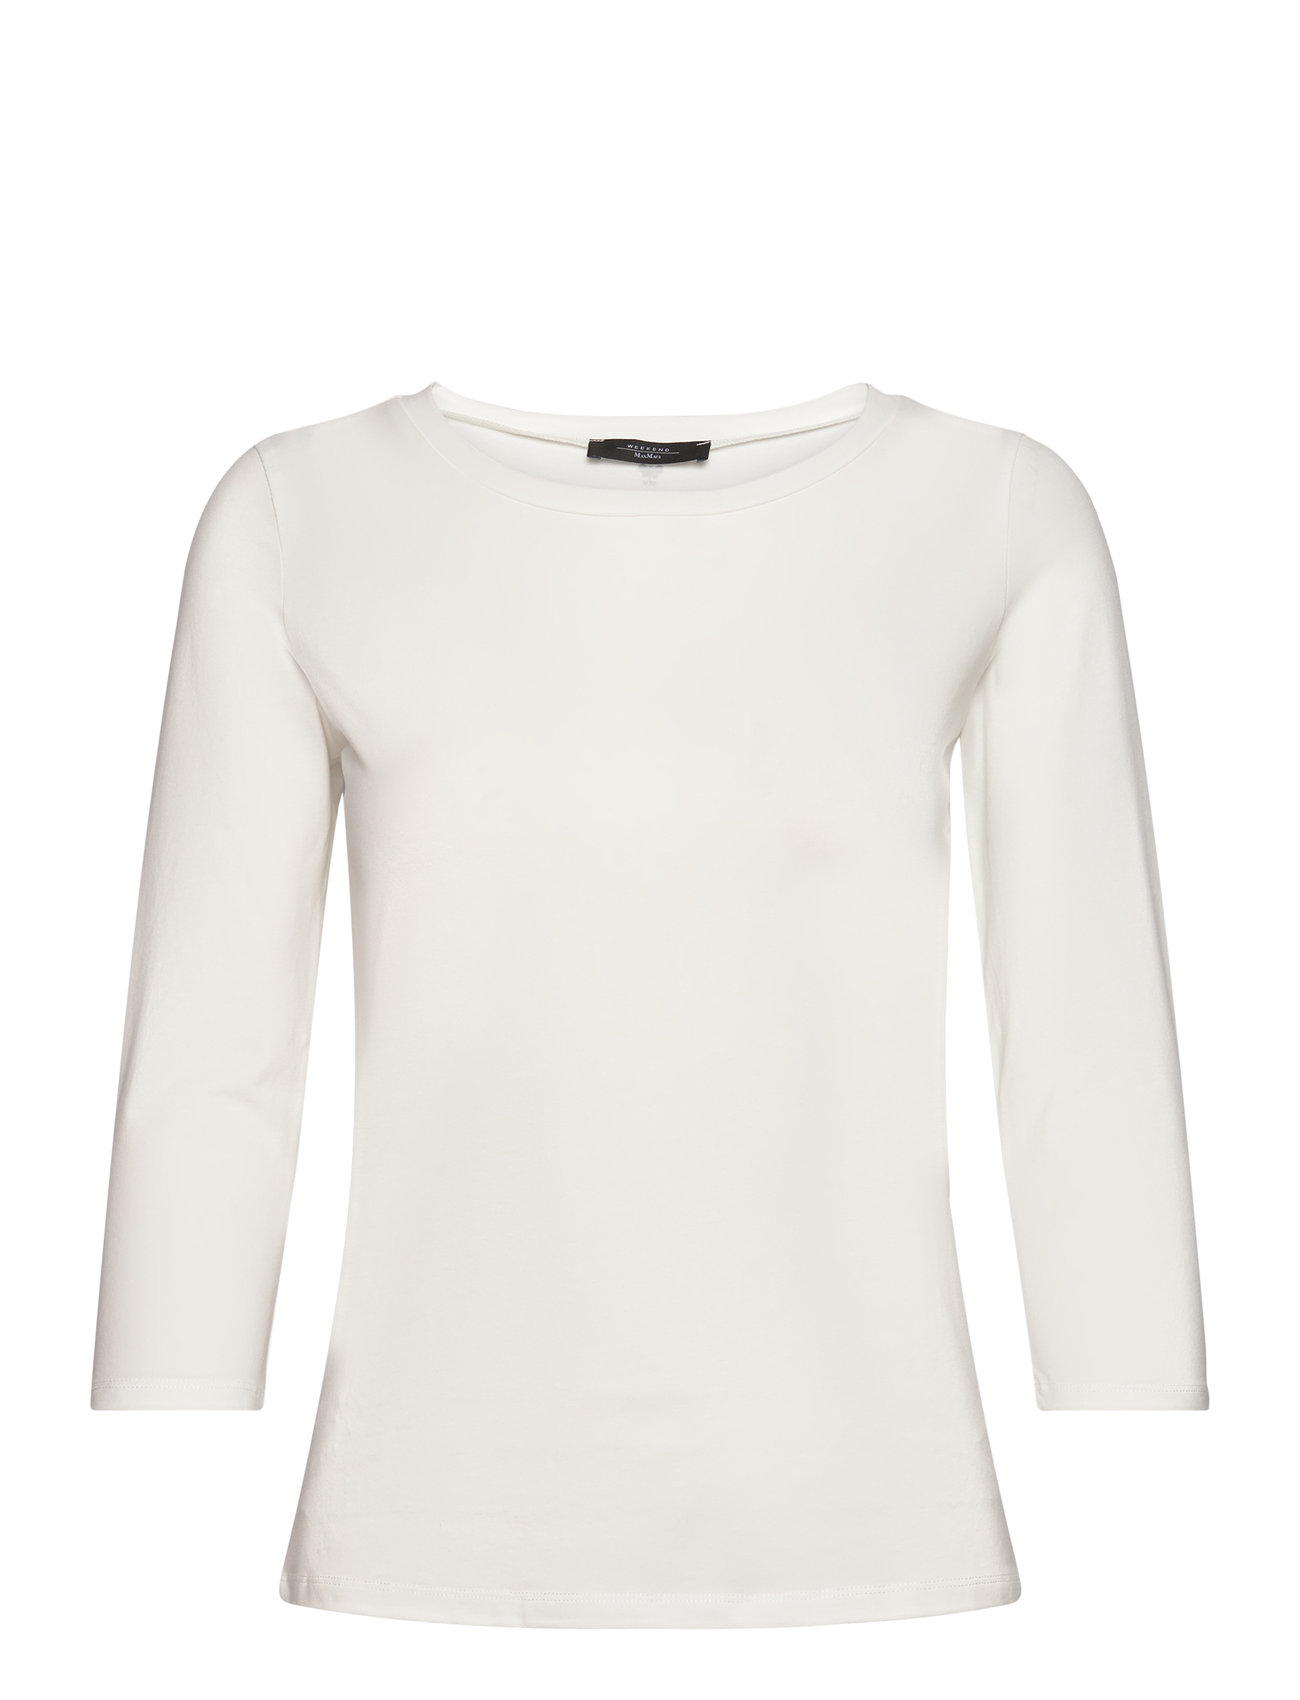 Multia Designers T-shirts & Tops Long-sleeved White Weekend Max Mara